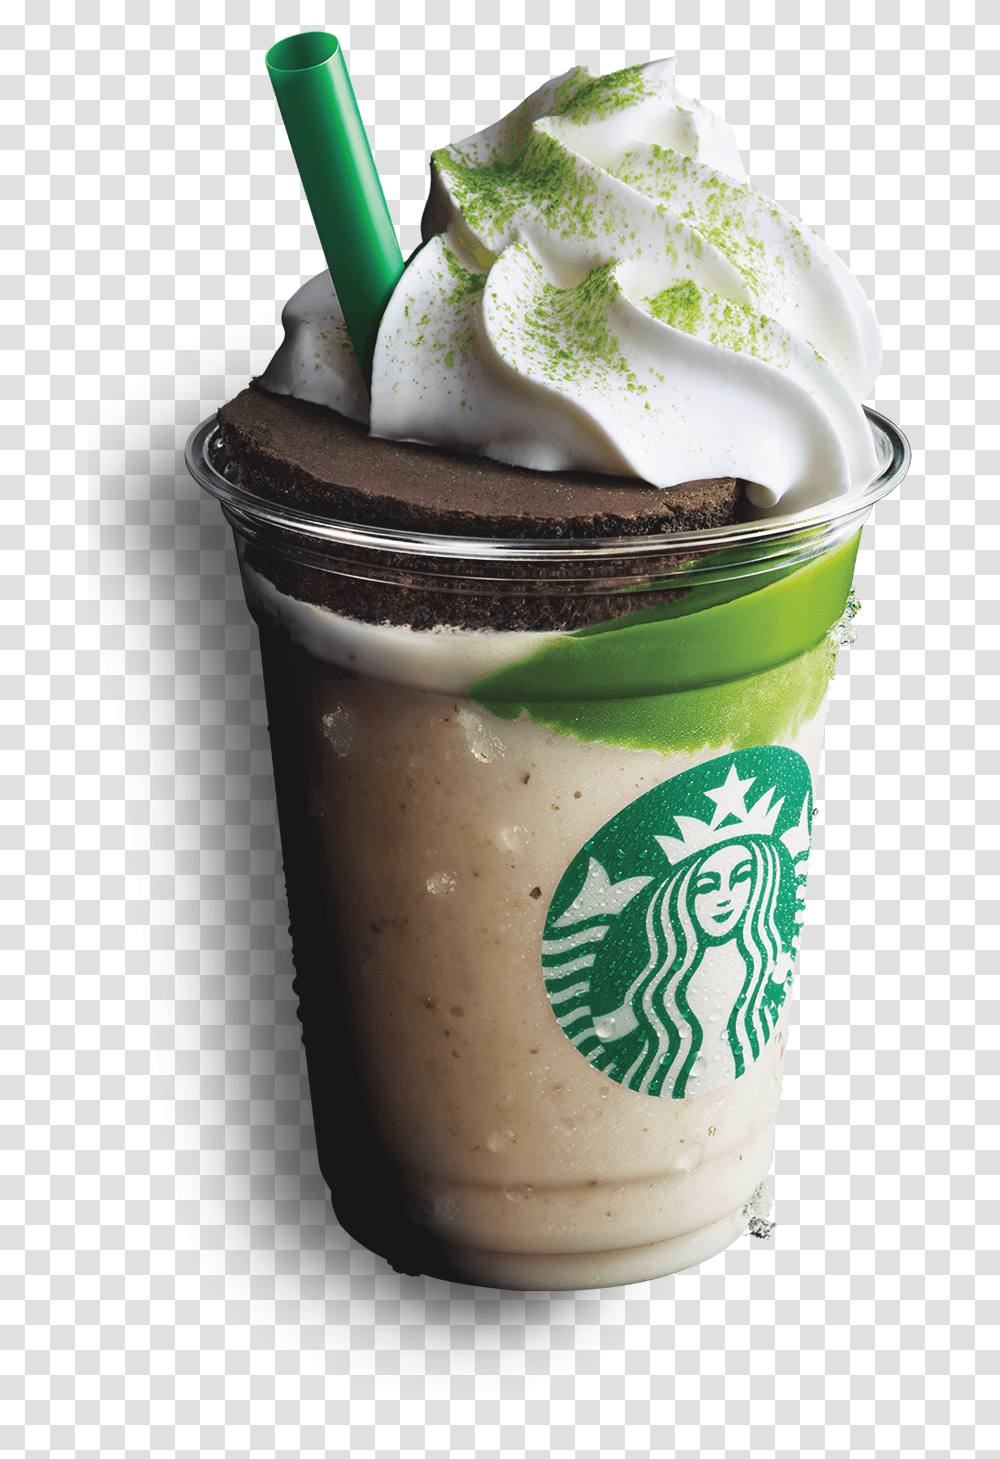 Starbucks Drinks Food Drink Starbucks New Logo 2011, Milk, Beverage, Cream, Dessert Transparent Png